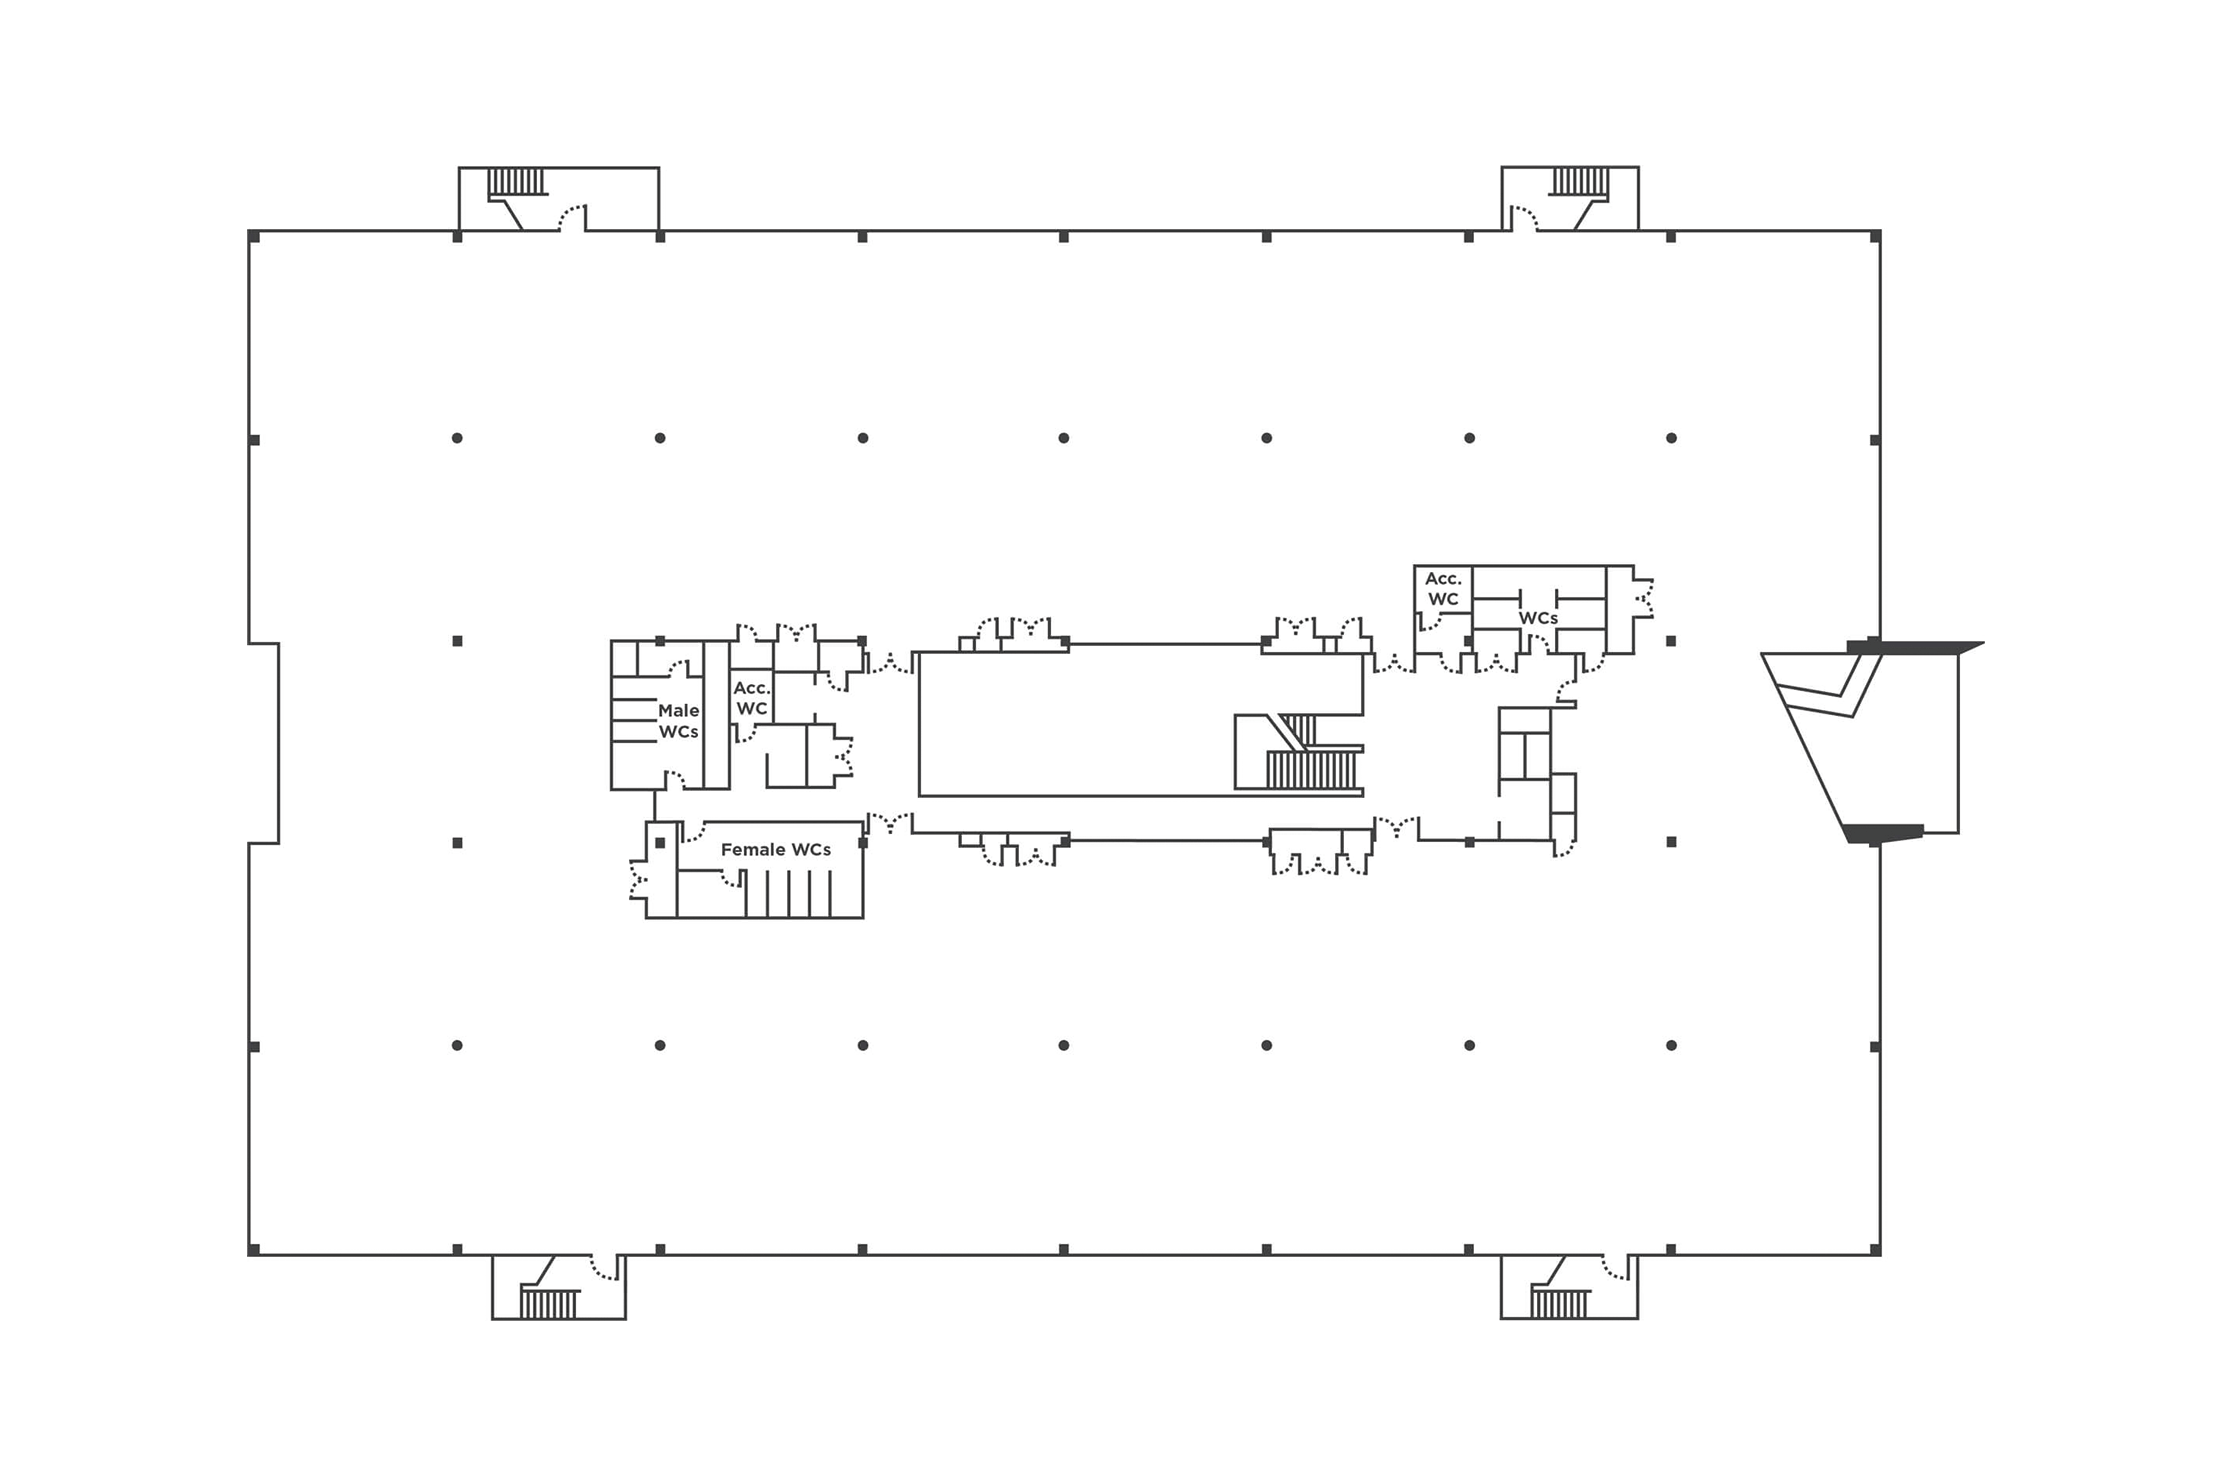 maplewood floor plan full example